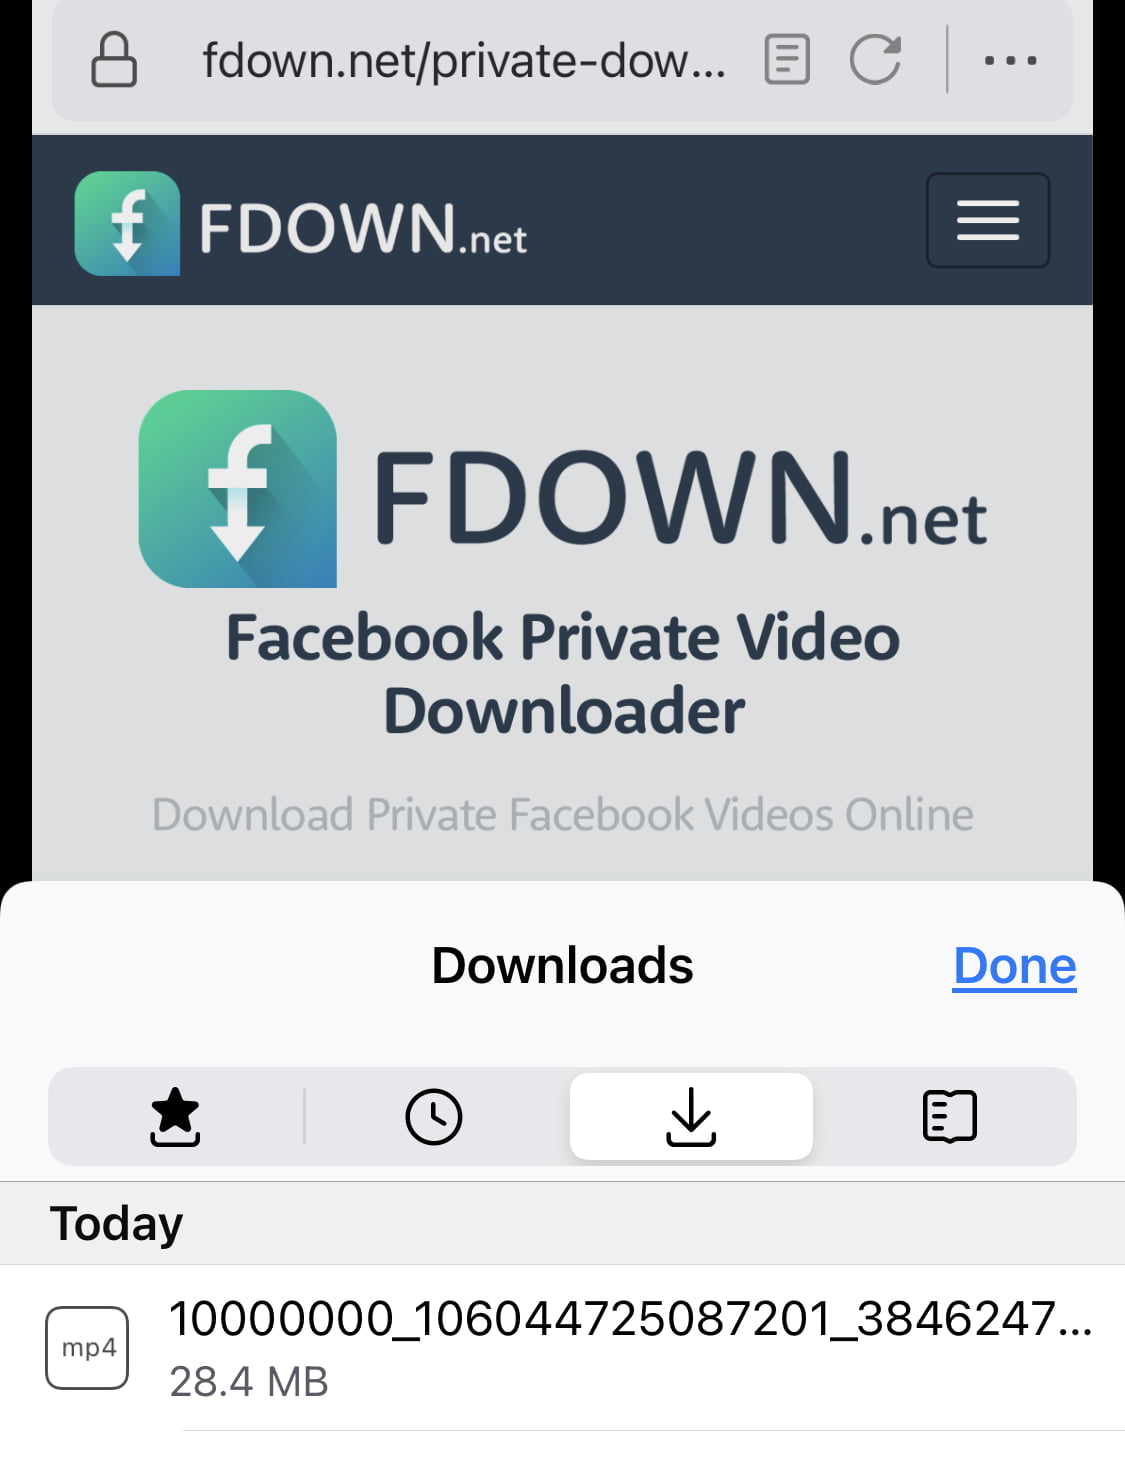 Fdown.net trong Firefox di động